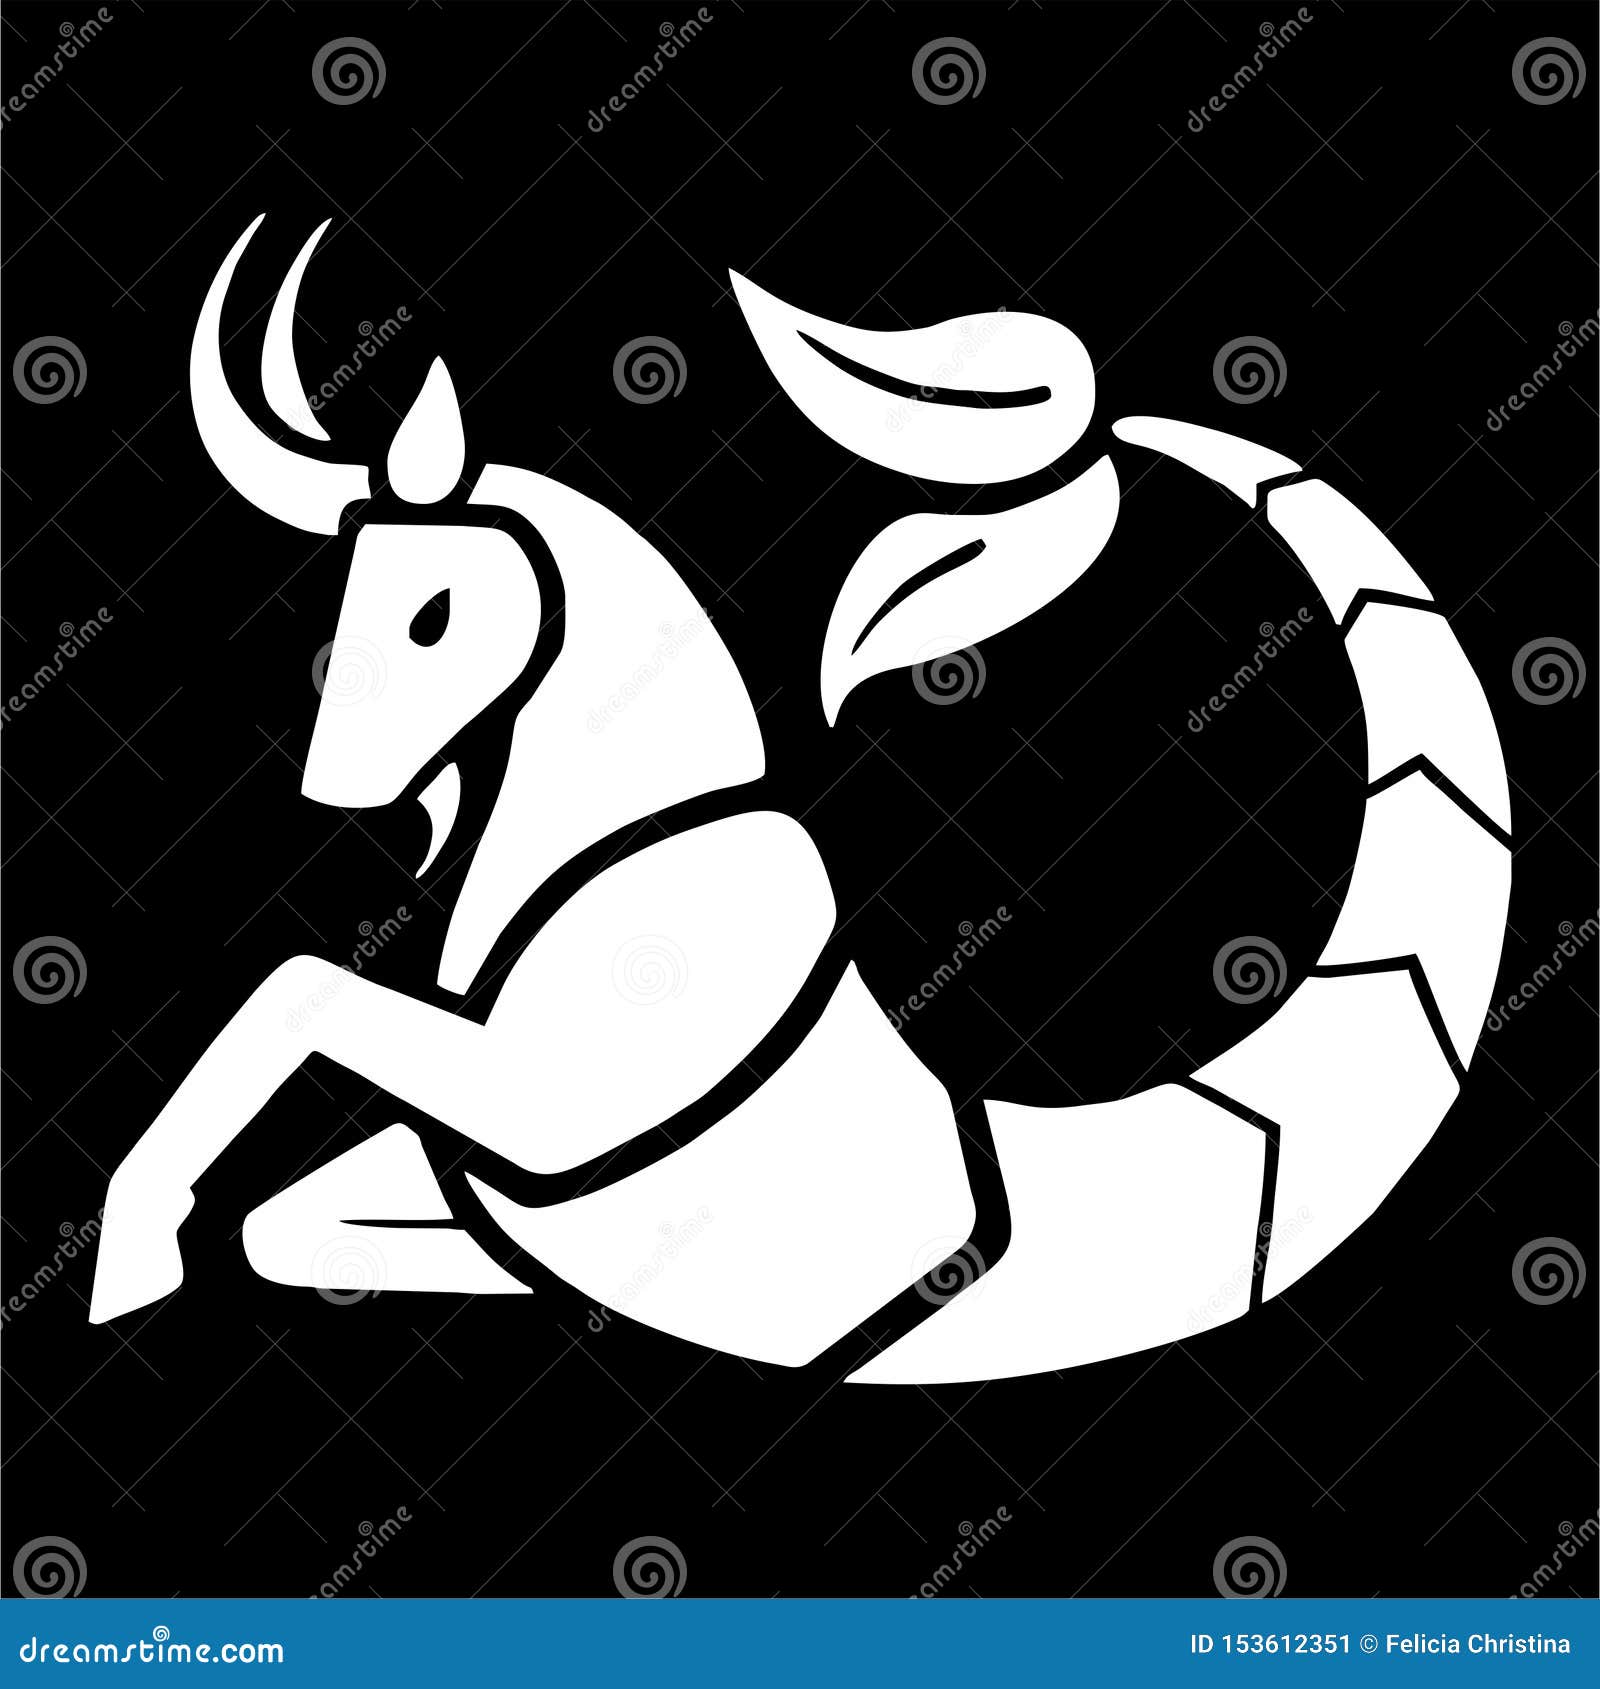 Zodiac / Astrology Symbols - Black and White Stock Illustration ...